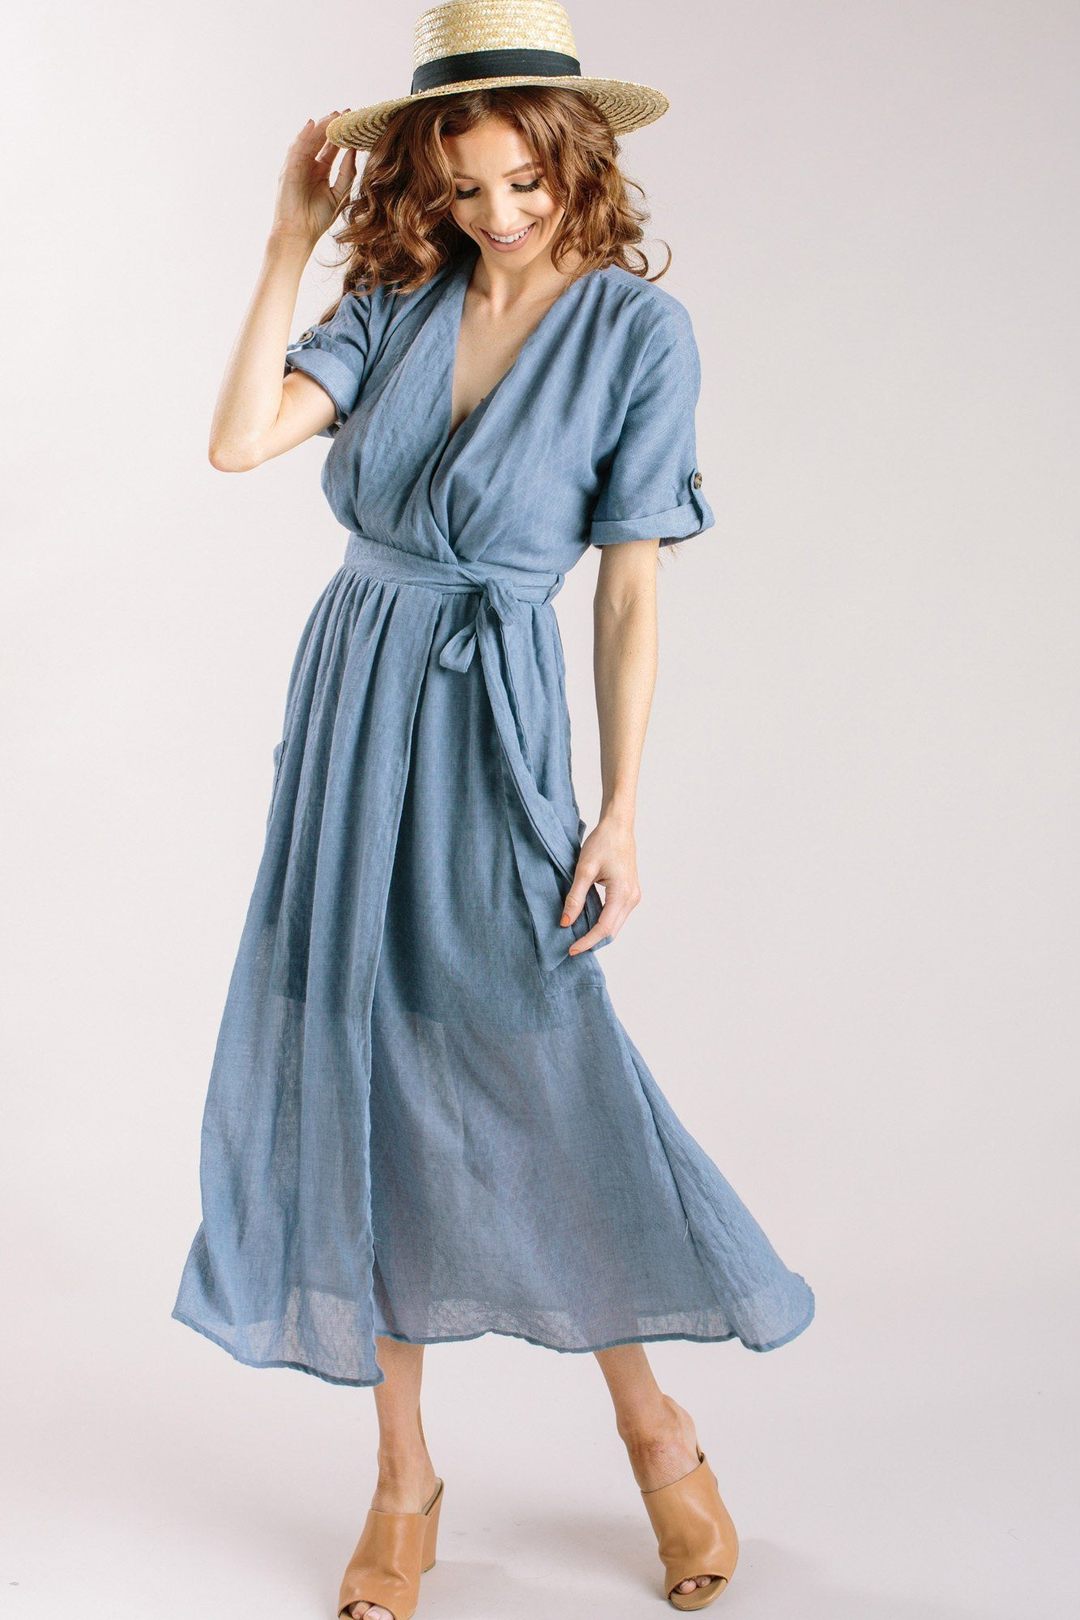 Morning Lavender Blue Flowy Midi Dress for Engagement Session